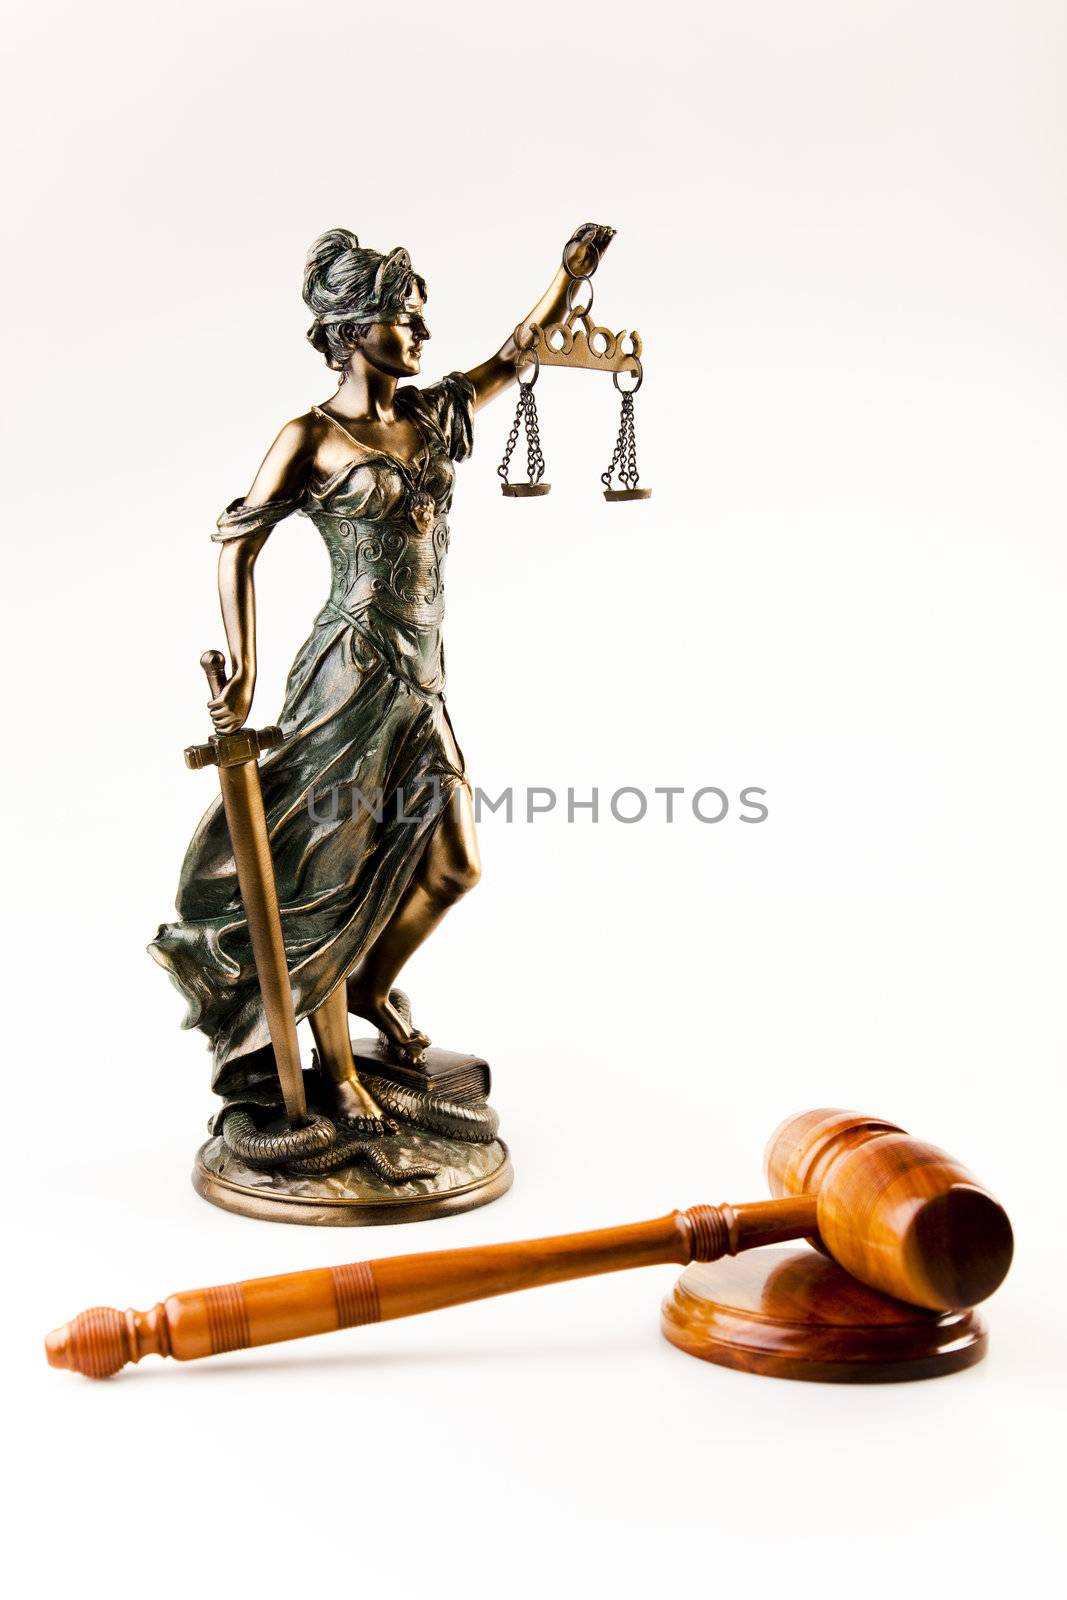 Antique statue of justice by JanPietruszka